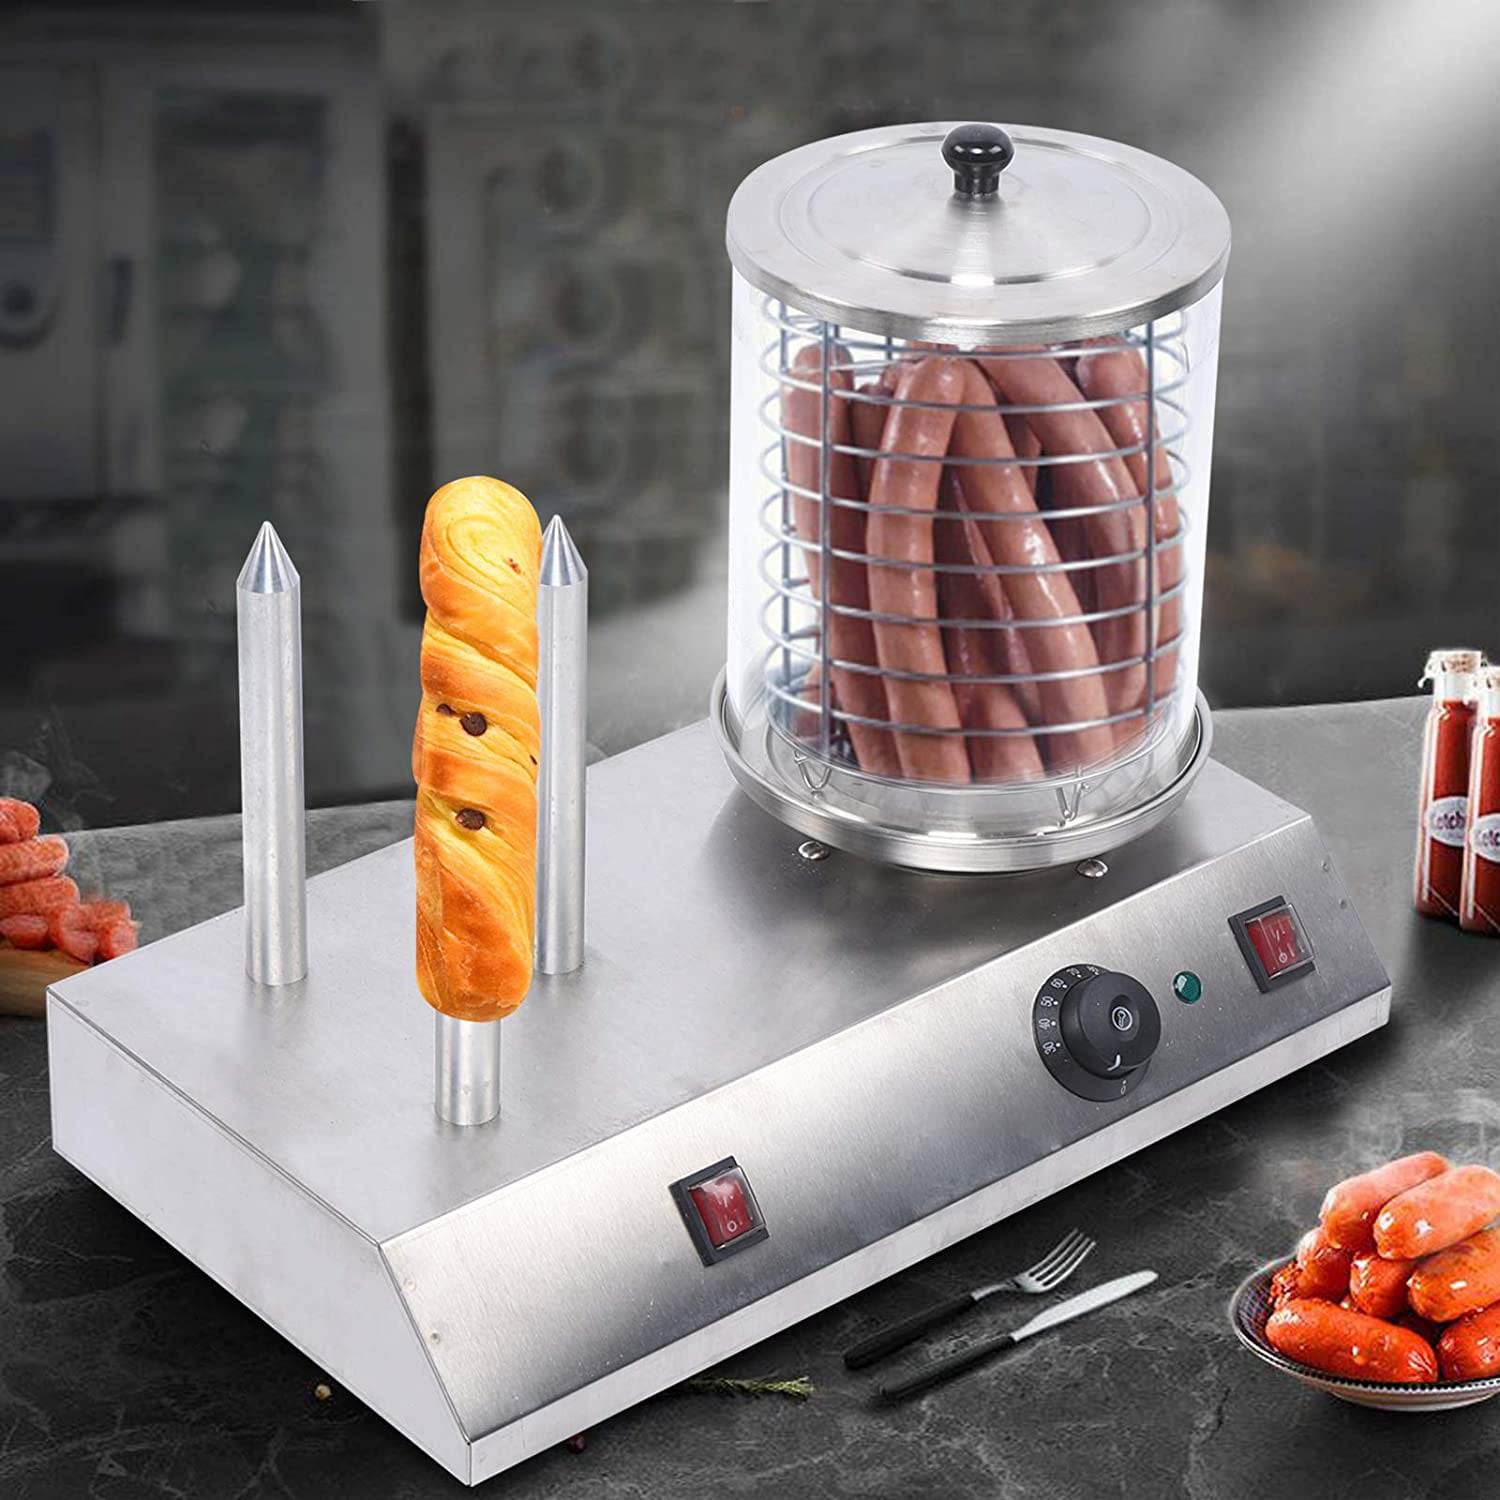 Hot Dog Steamer with Bun Warmer 110V 850W Portable Commercial Hotdog Cooker and Bun Steamer for Breakfast Sausages & Bread Sticks 